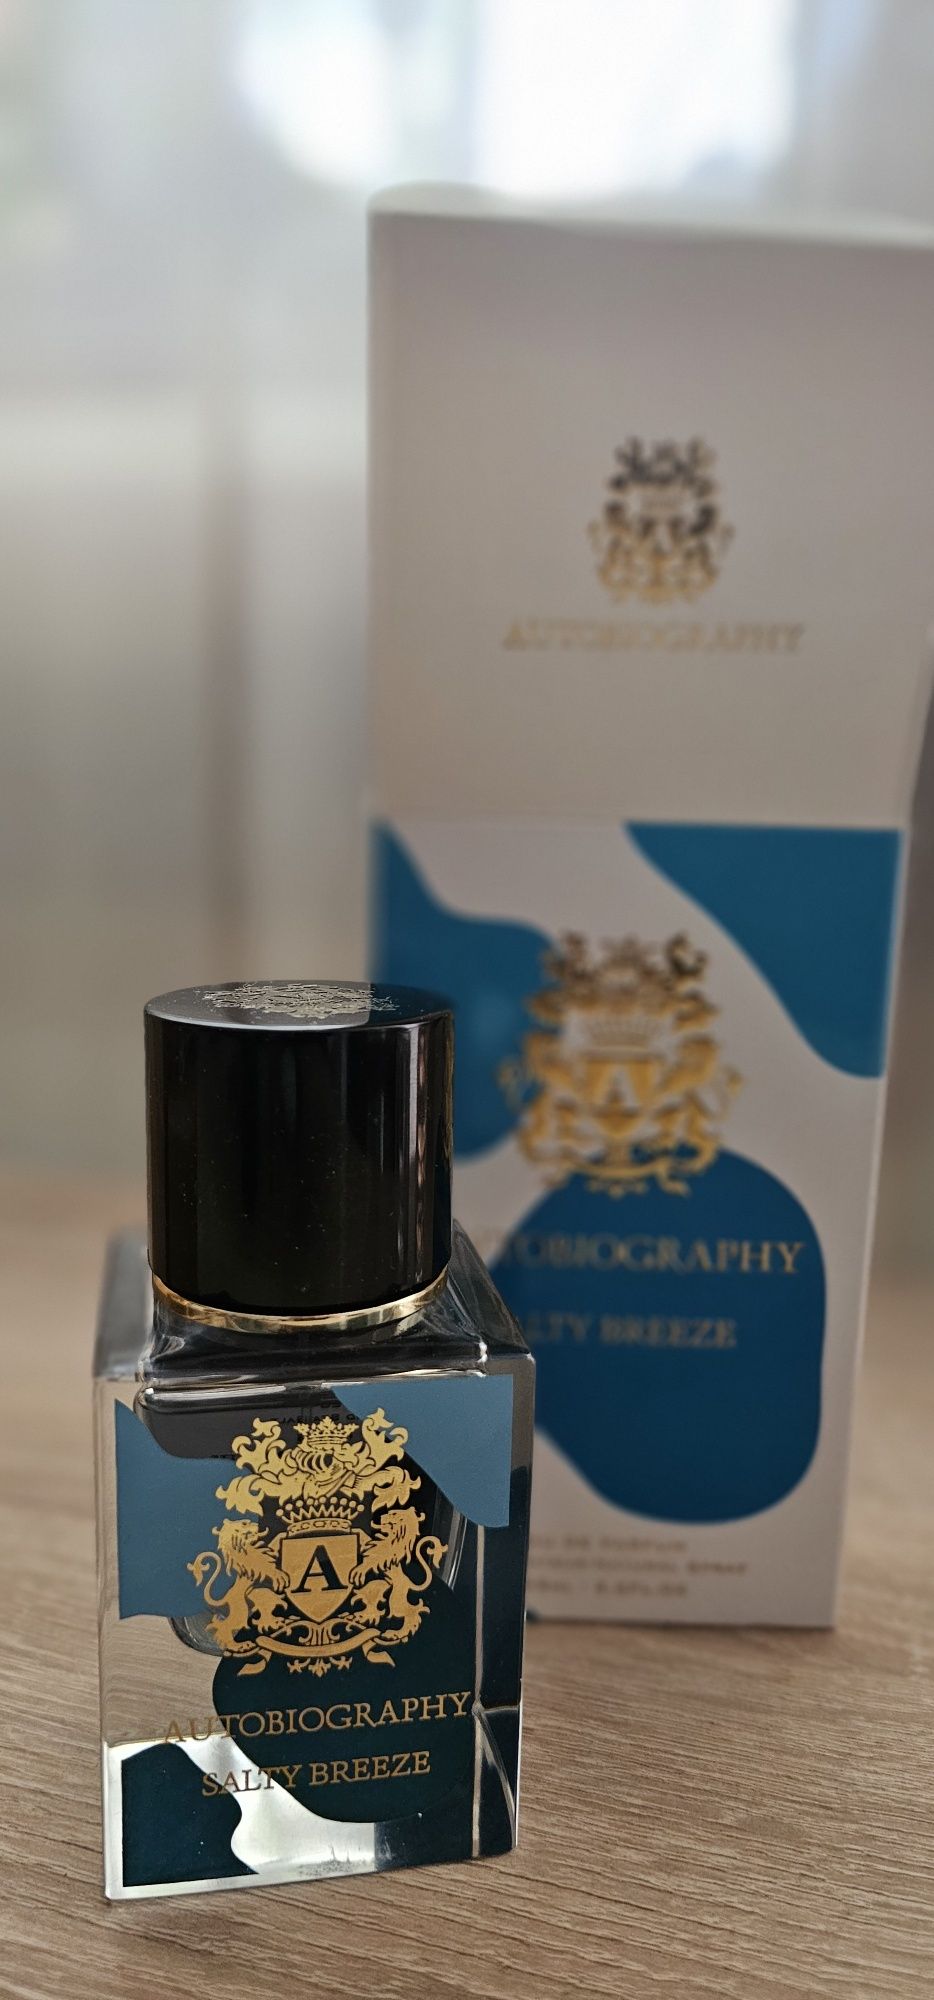 Parfum Autobiography- Salty breeze 65ml